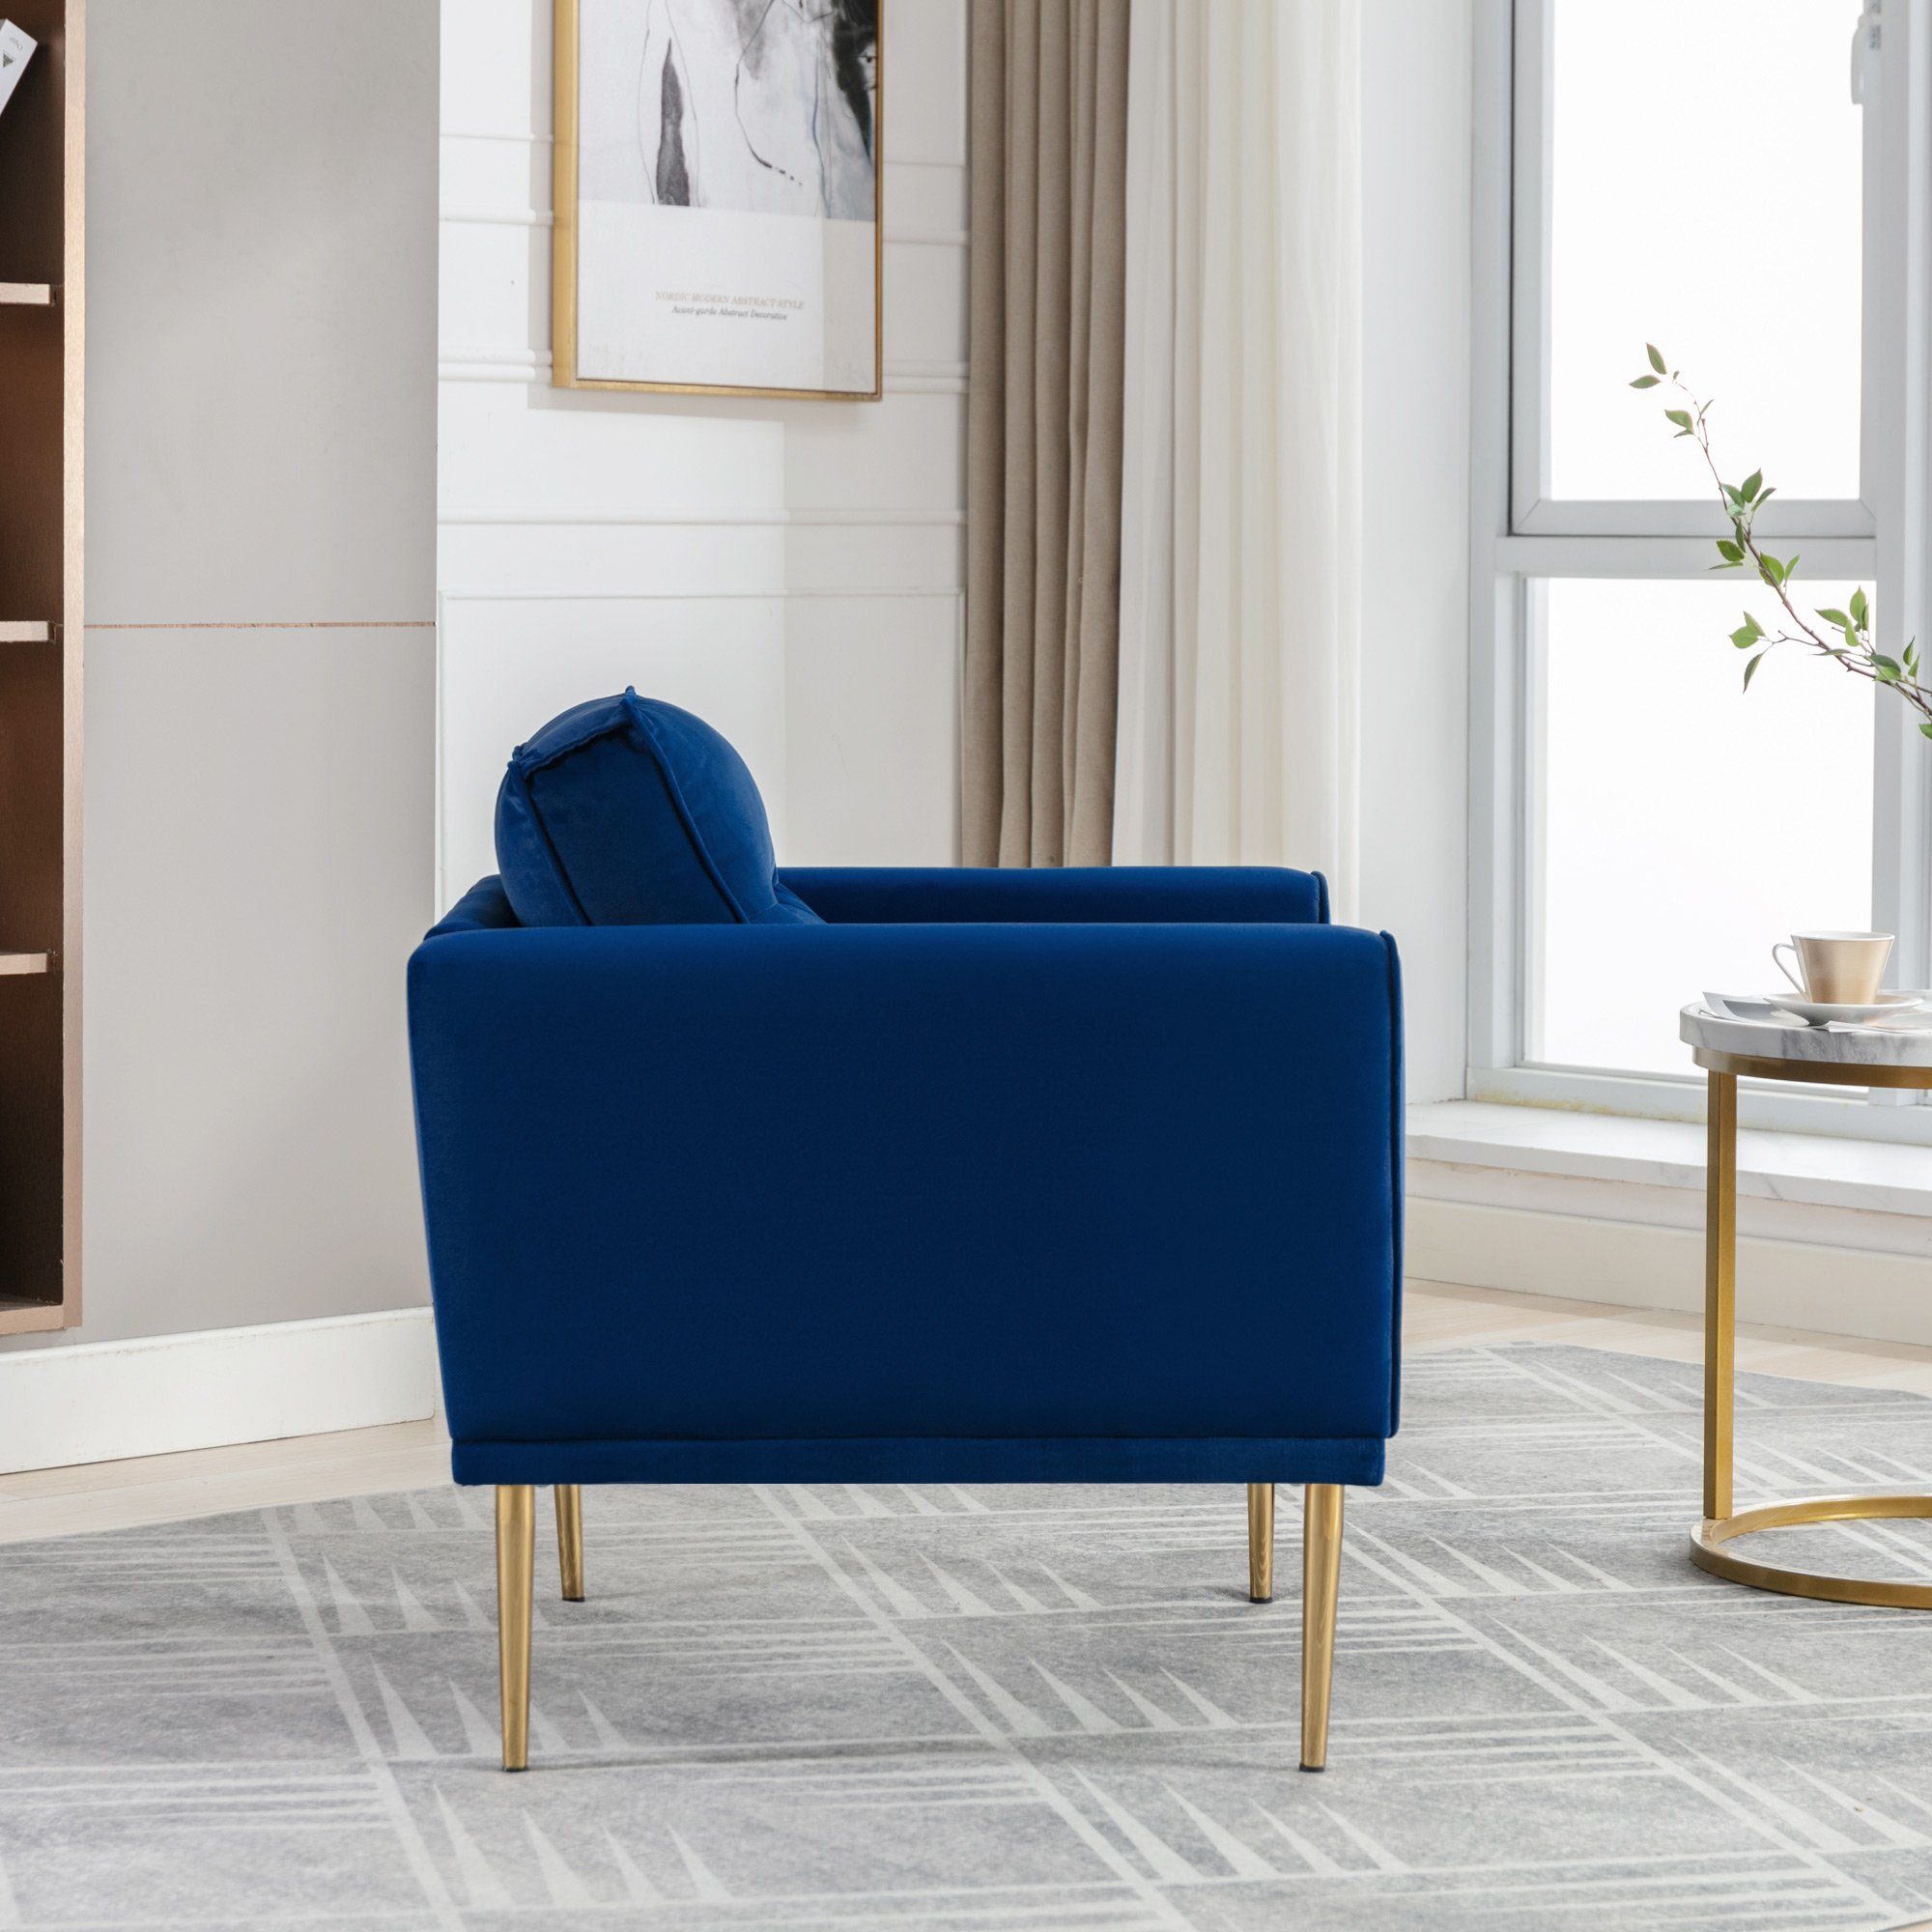 WISHDOR Sessel Relaxsessel, Relaxstuhl, Fernsehsessel, Loungesessel, blau Samtstuhl moderner mit Polster Sessel Sitzkissen), lässiger und einfacher (Sessel